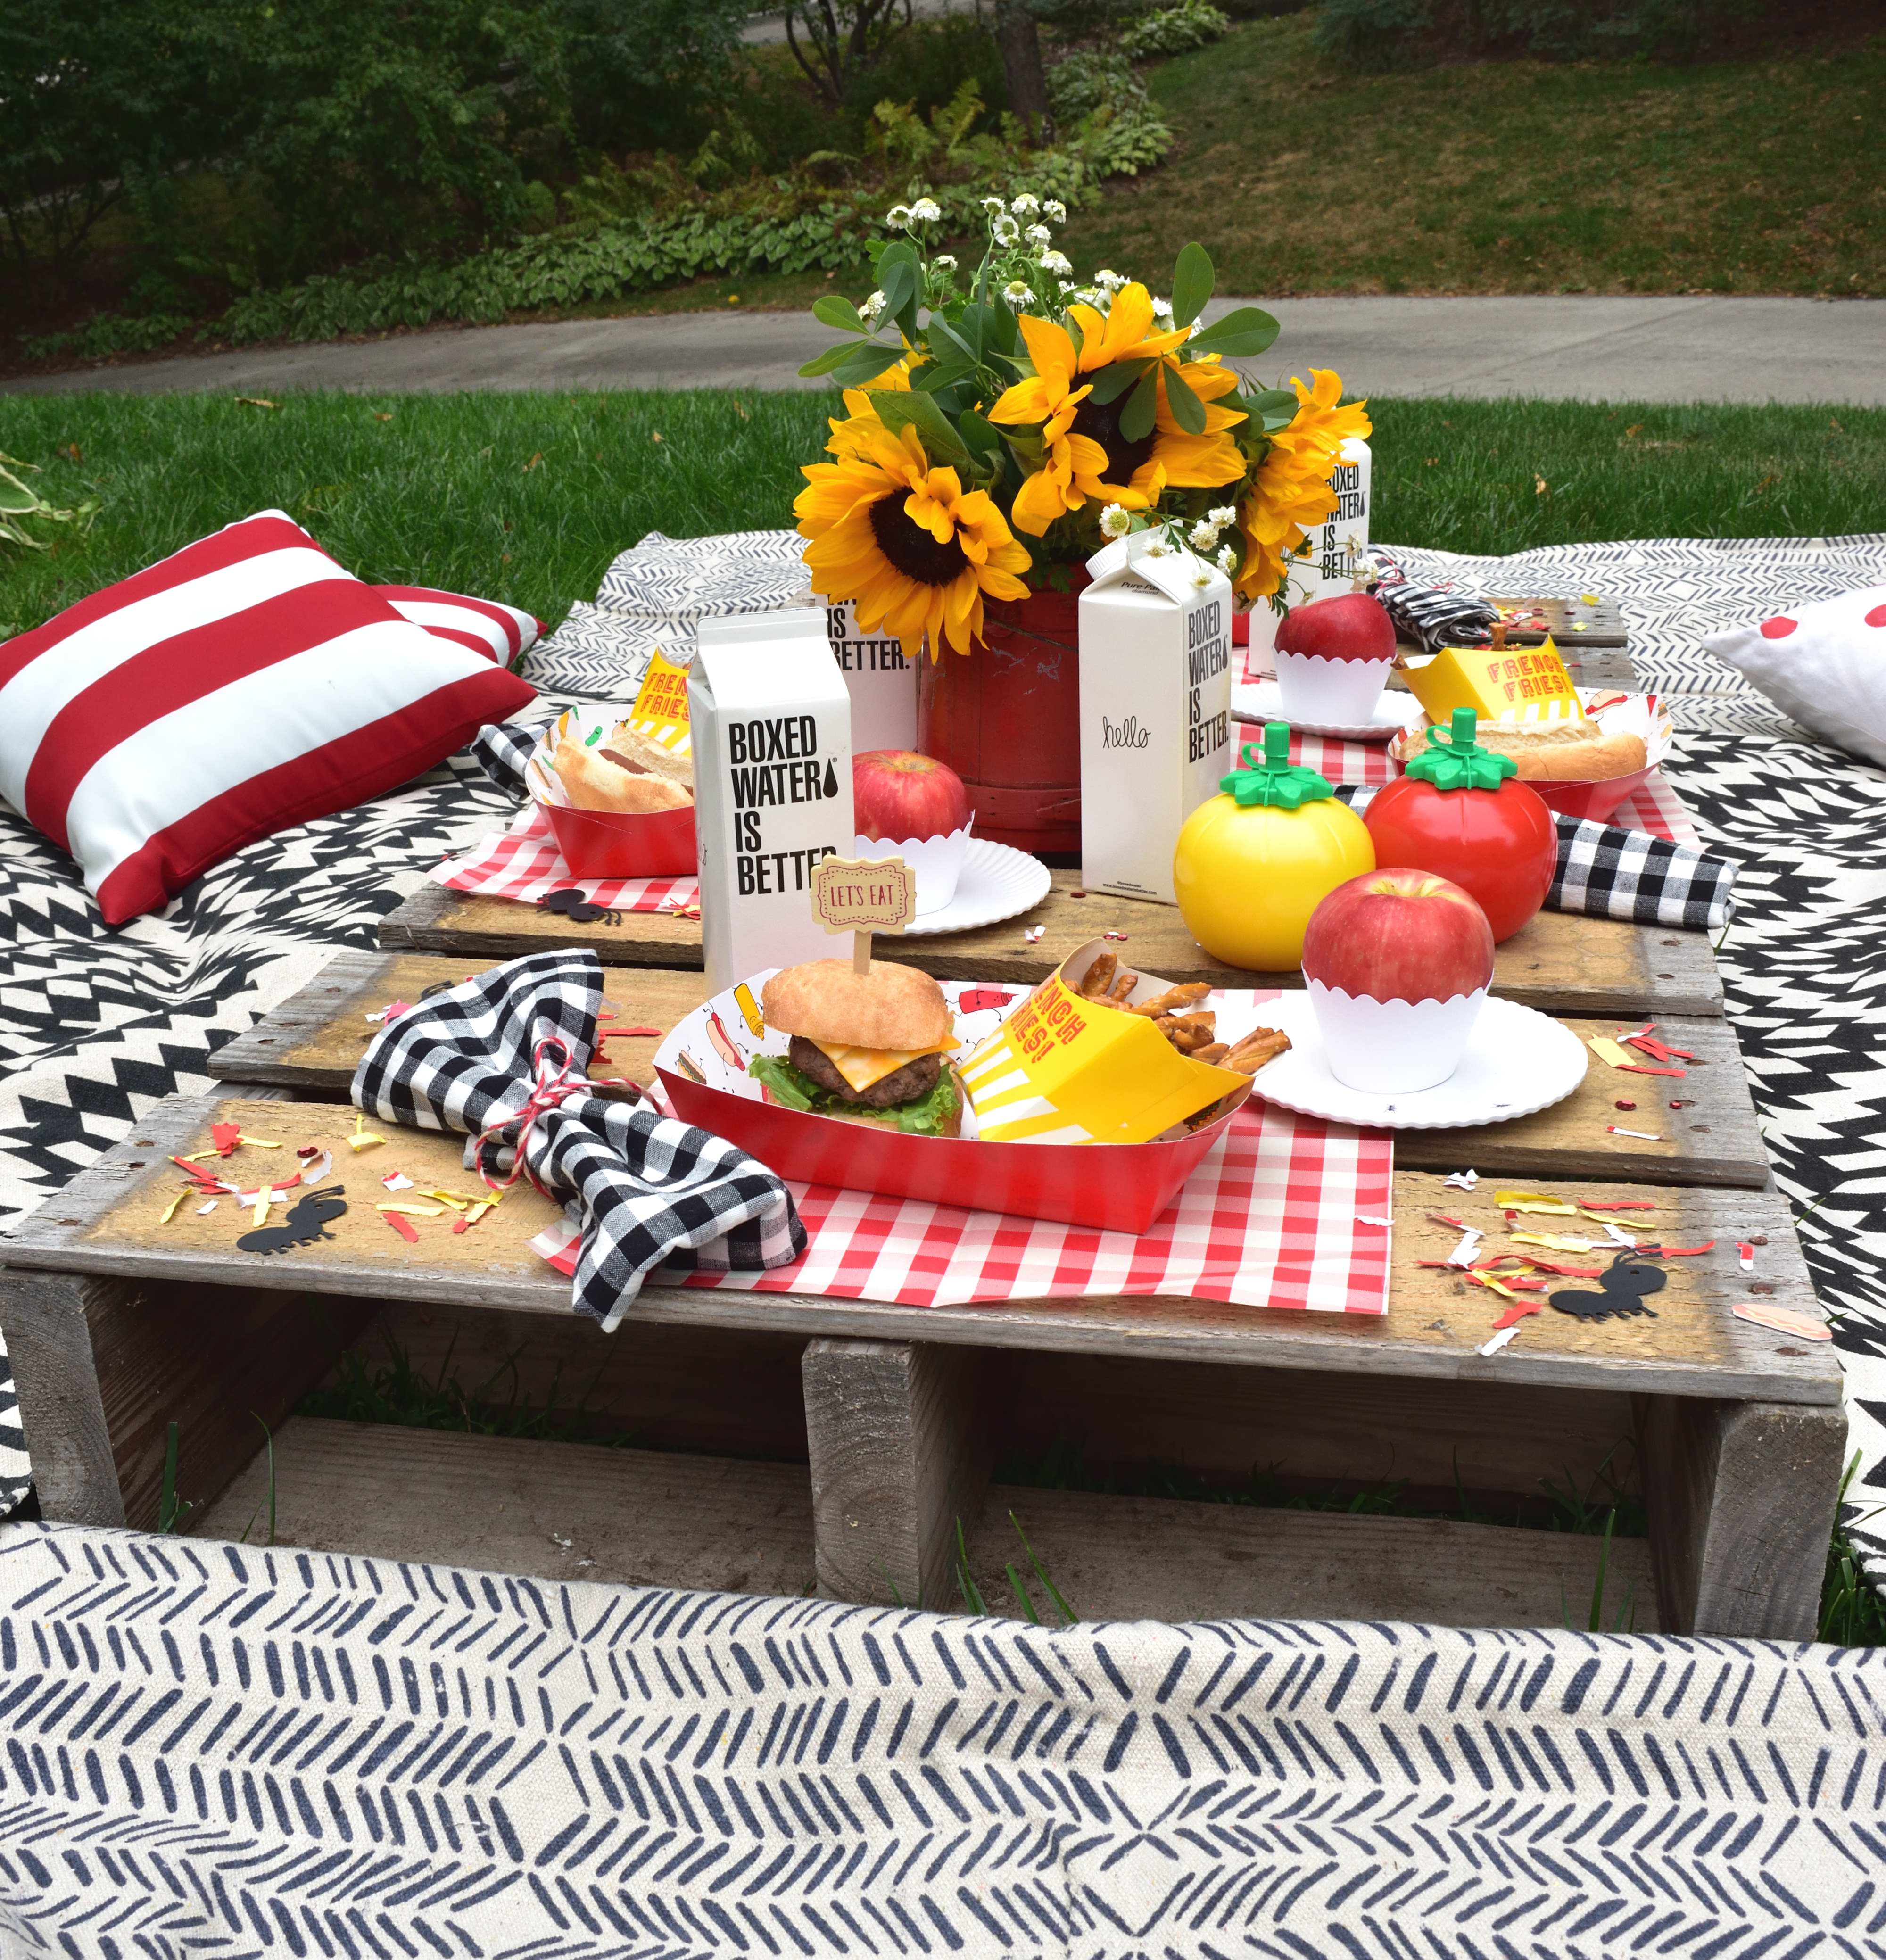 Backyard picnic ideas, food & decorations for summertime fun!